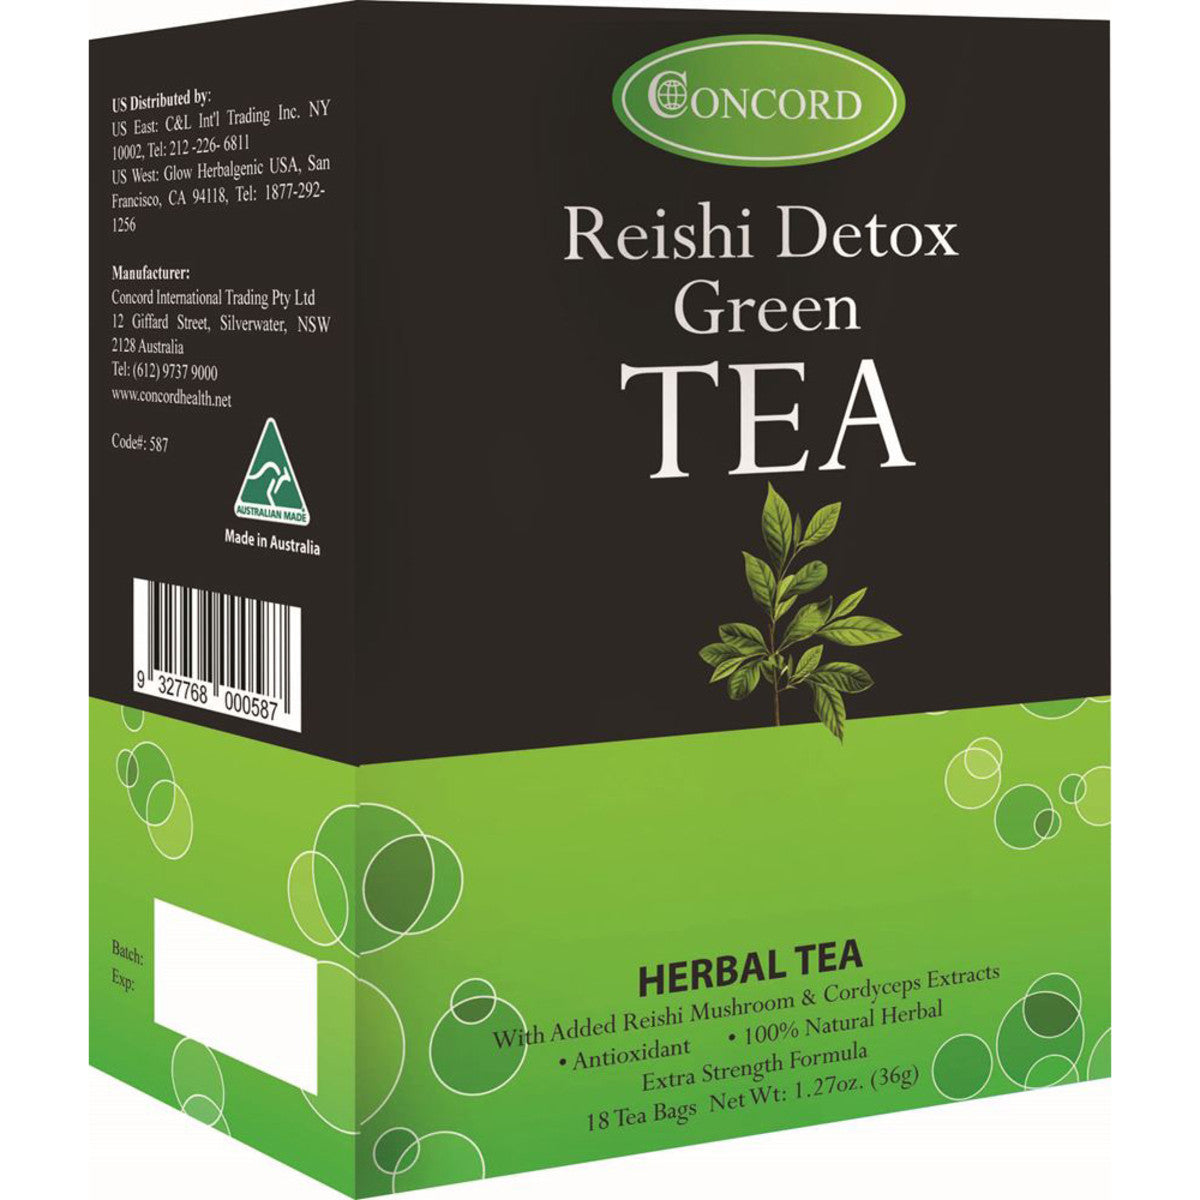 Concord - Reishi Detox Green Tea